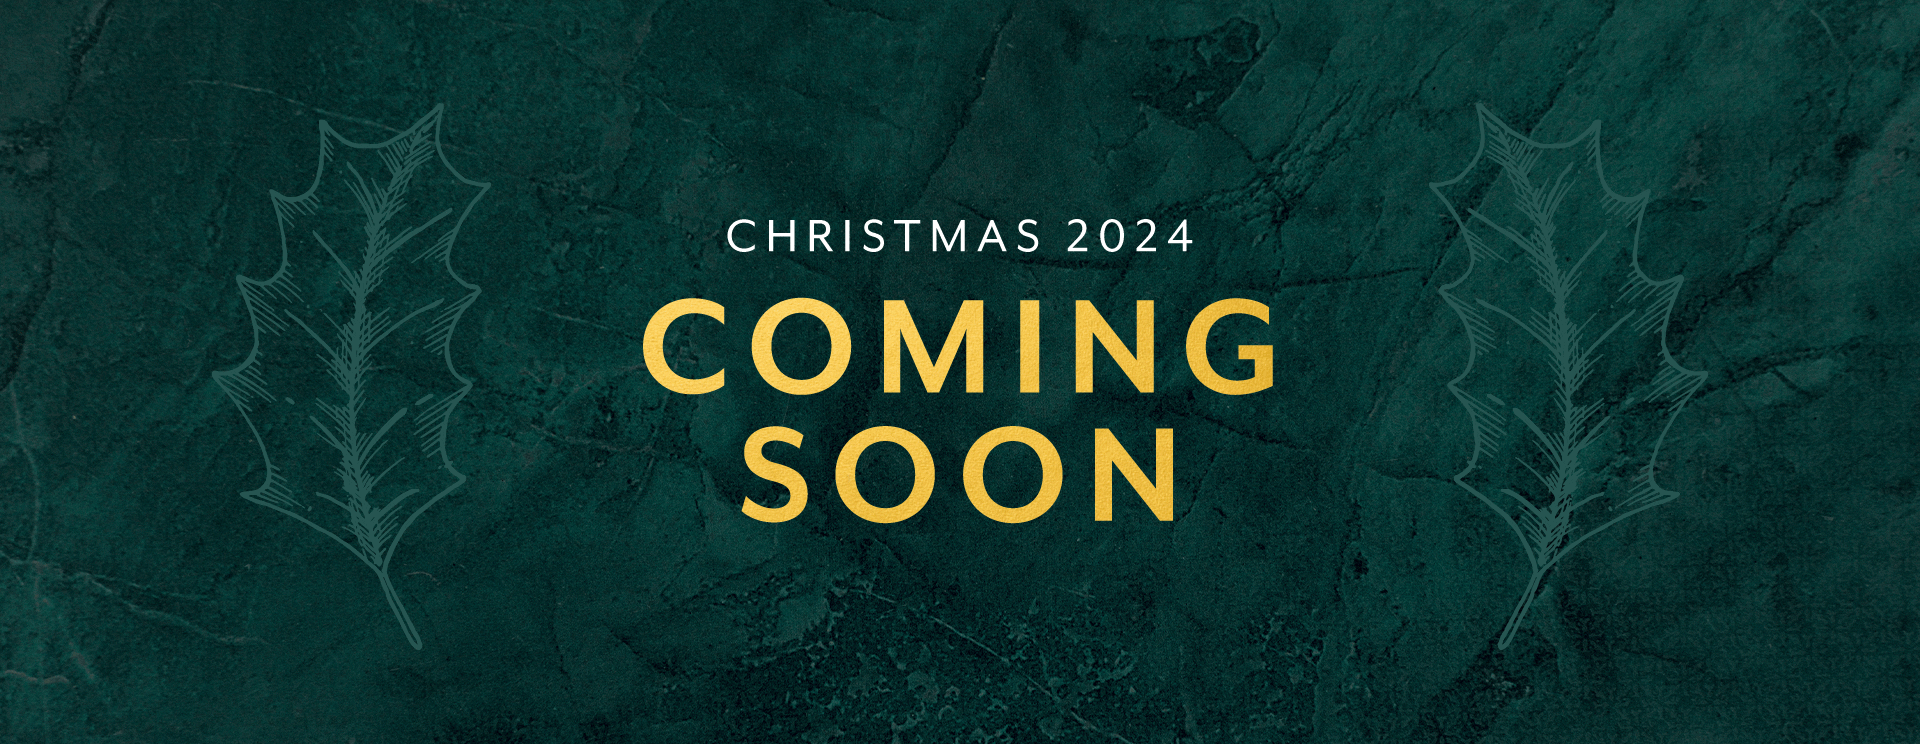 Christmas 2024 at Waltham Cross